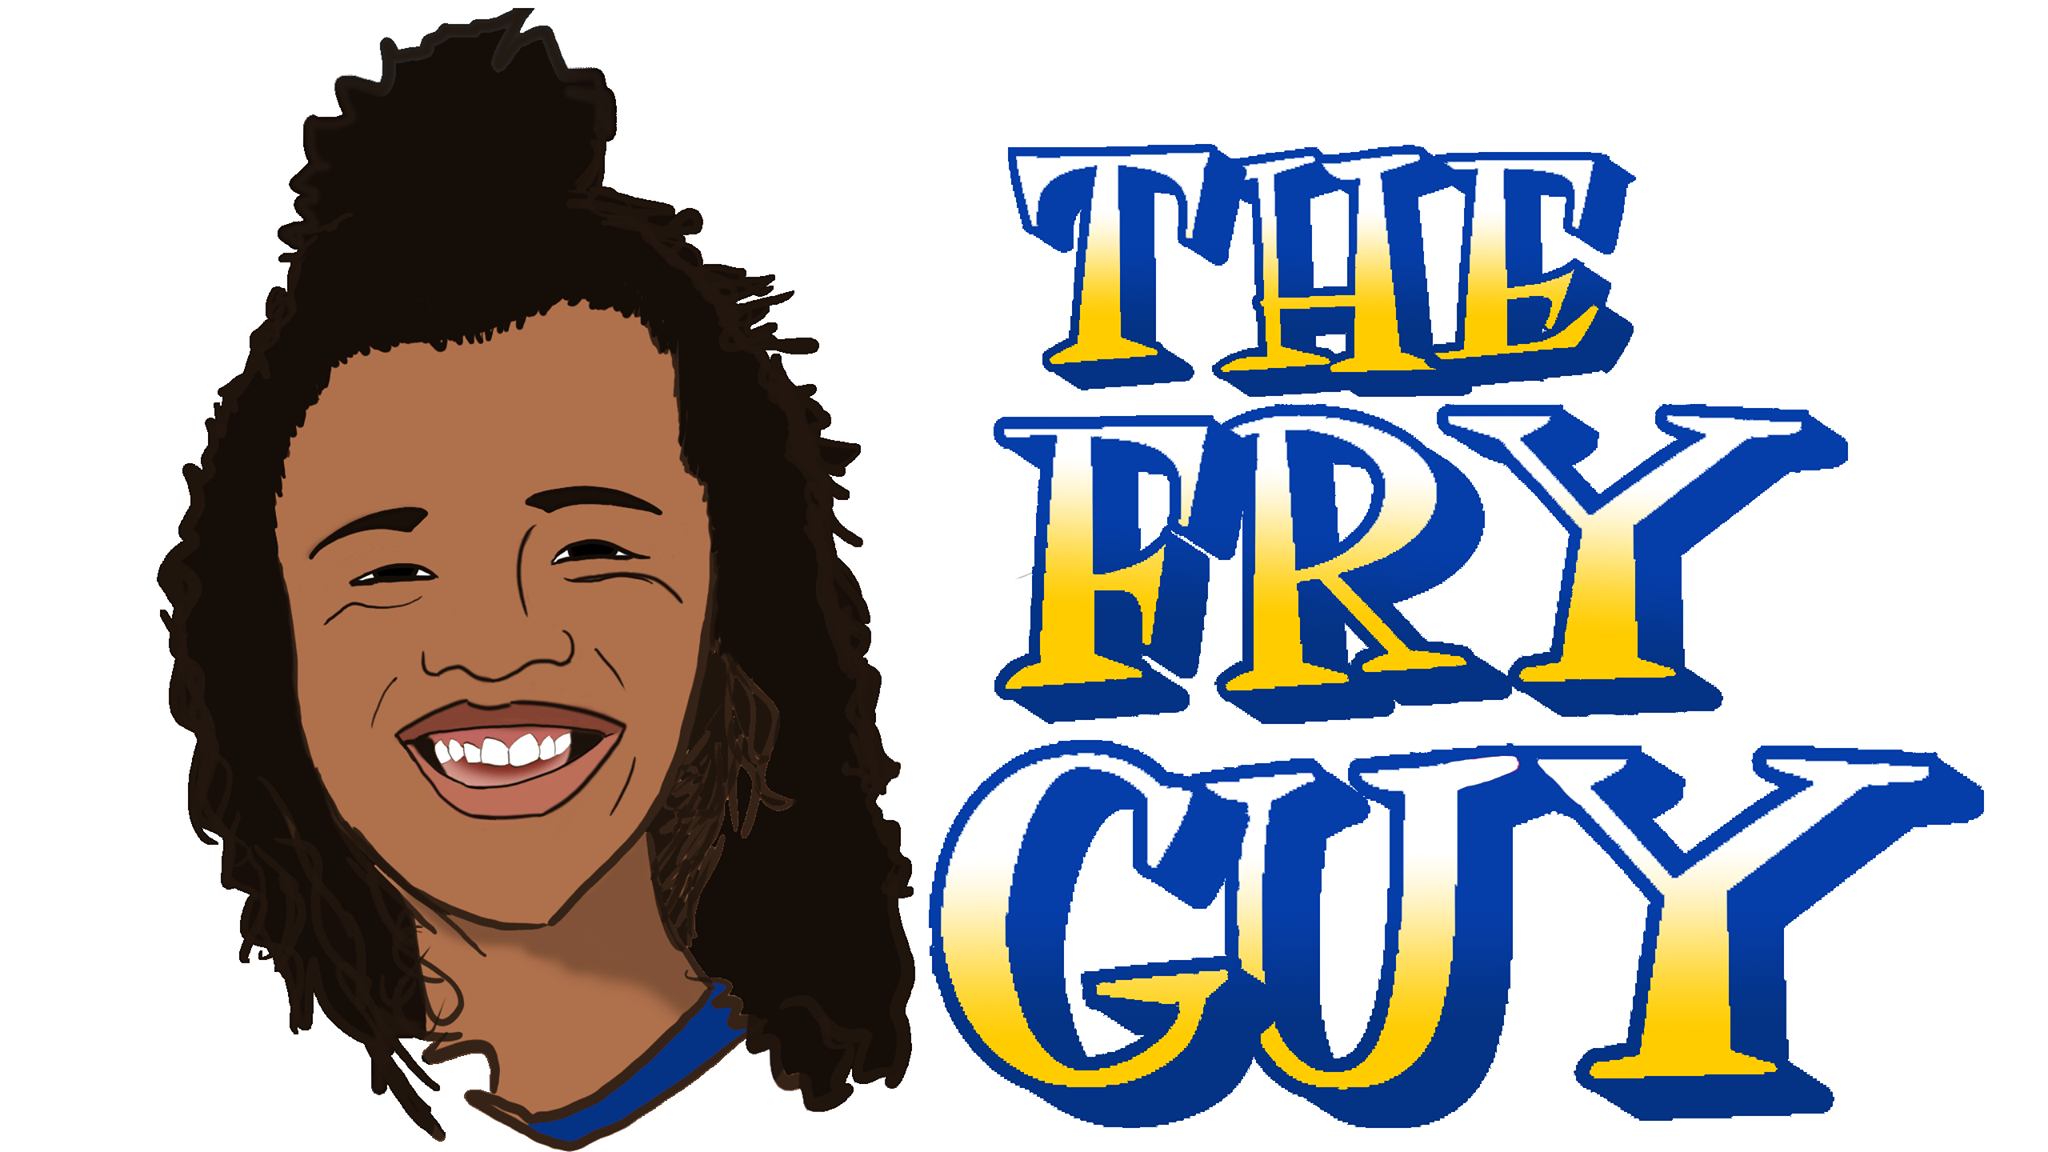 The Fry Guy's logo